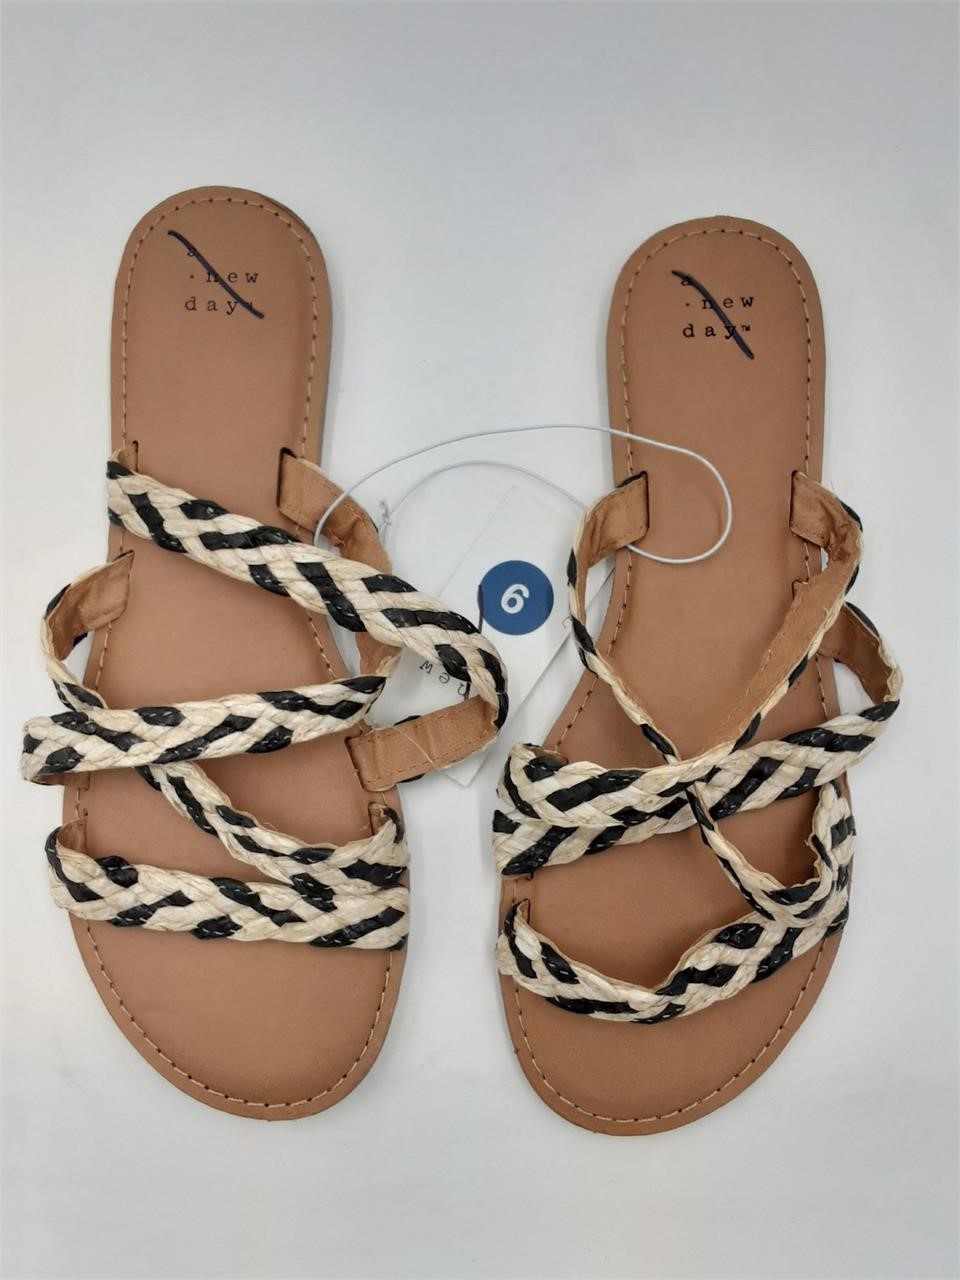 A New Day sandals black& white straps size 9